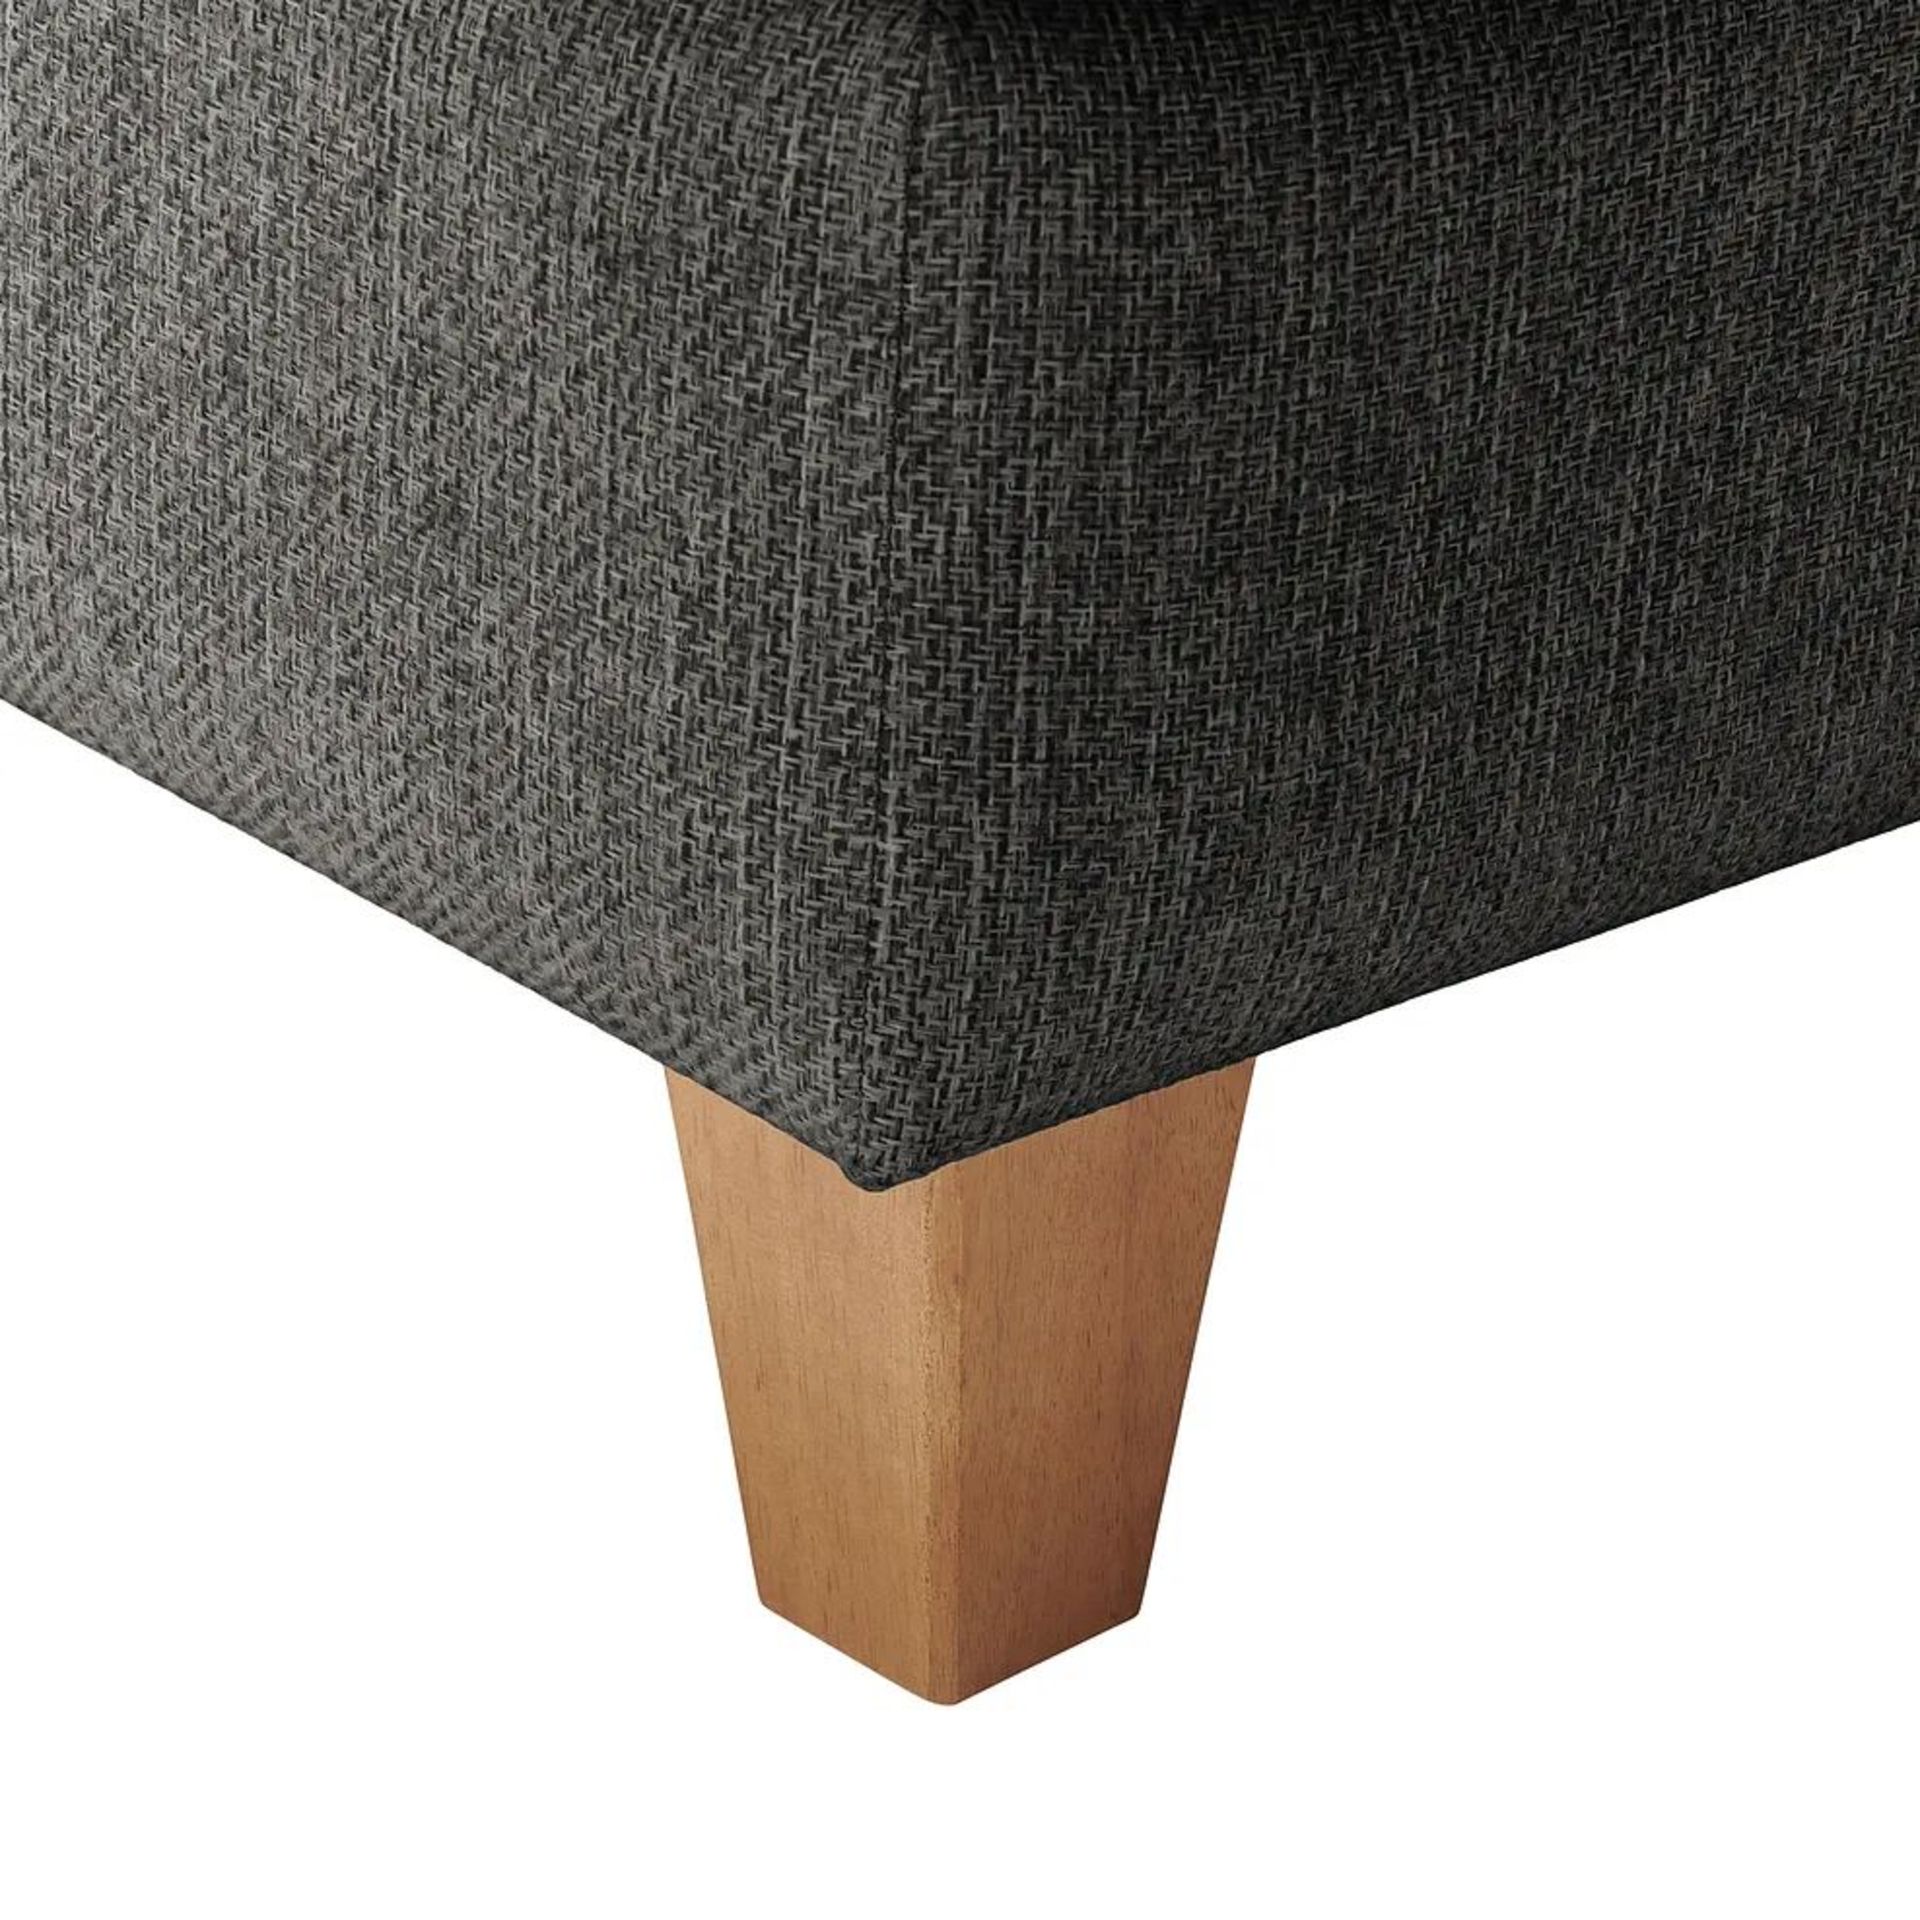 BRAND NEW INCA Large Storage Footstool - CHARCOAL FABRIC. RRP £529. Our large Inca storage footstool - Image 4 of 5